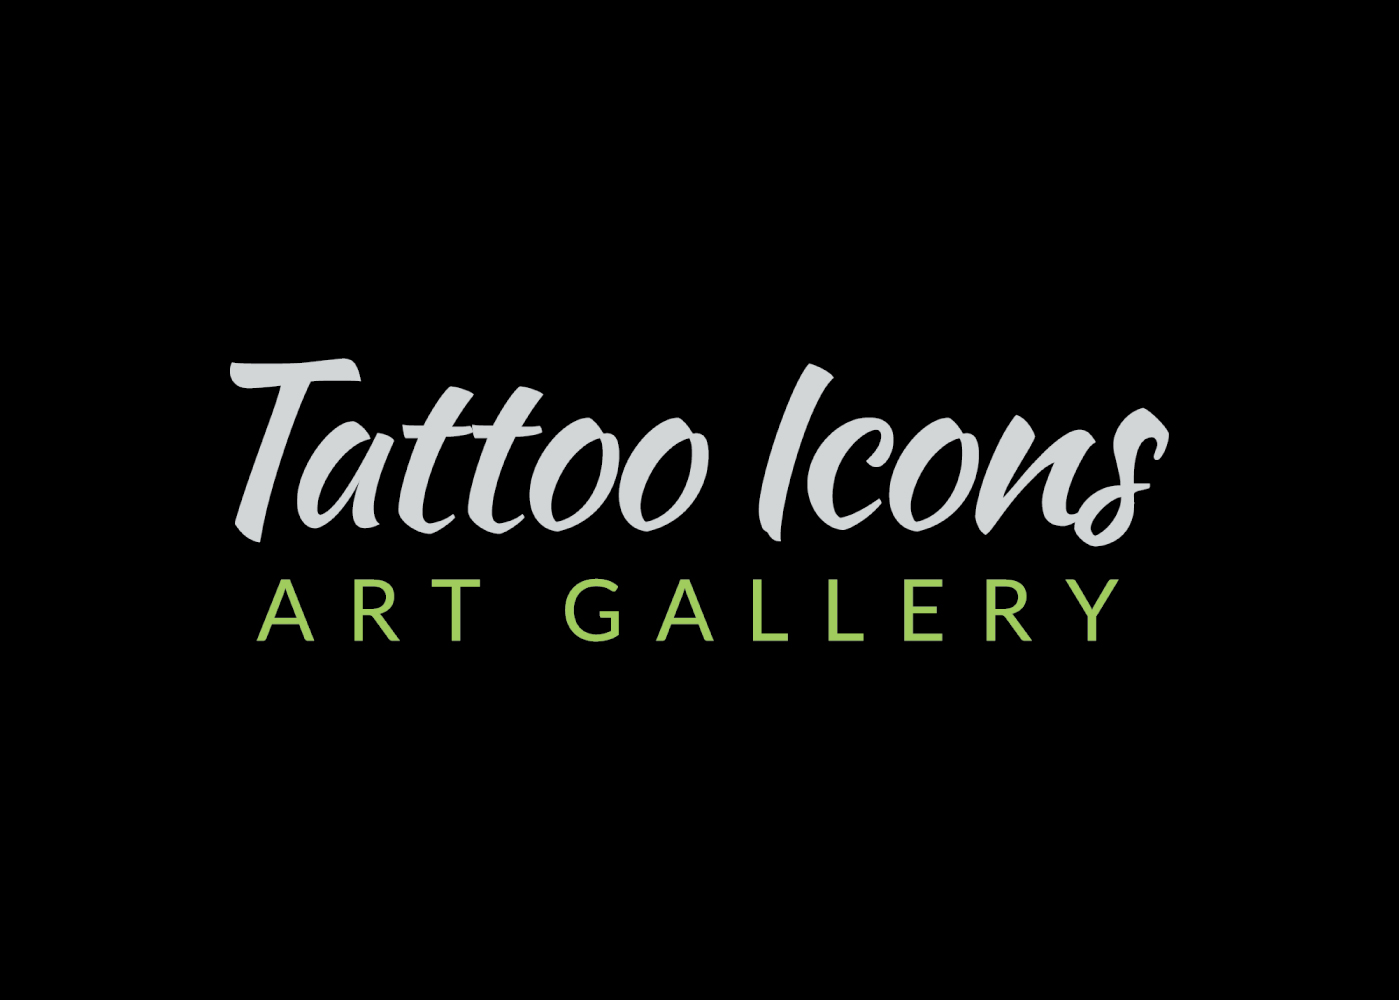 Tattoo Icons Art Gallery - Grunge Muffin Designs